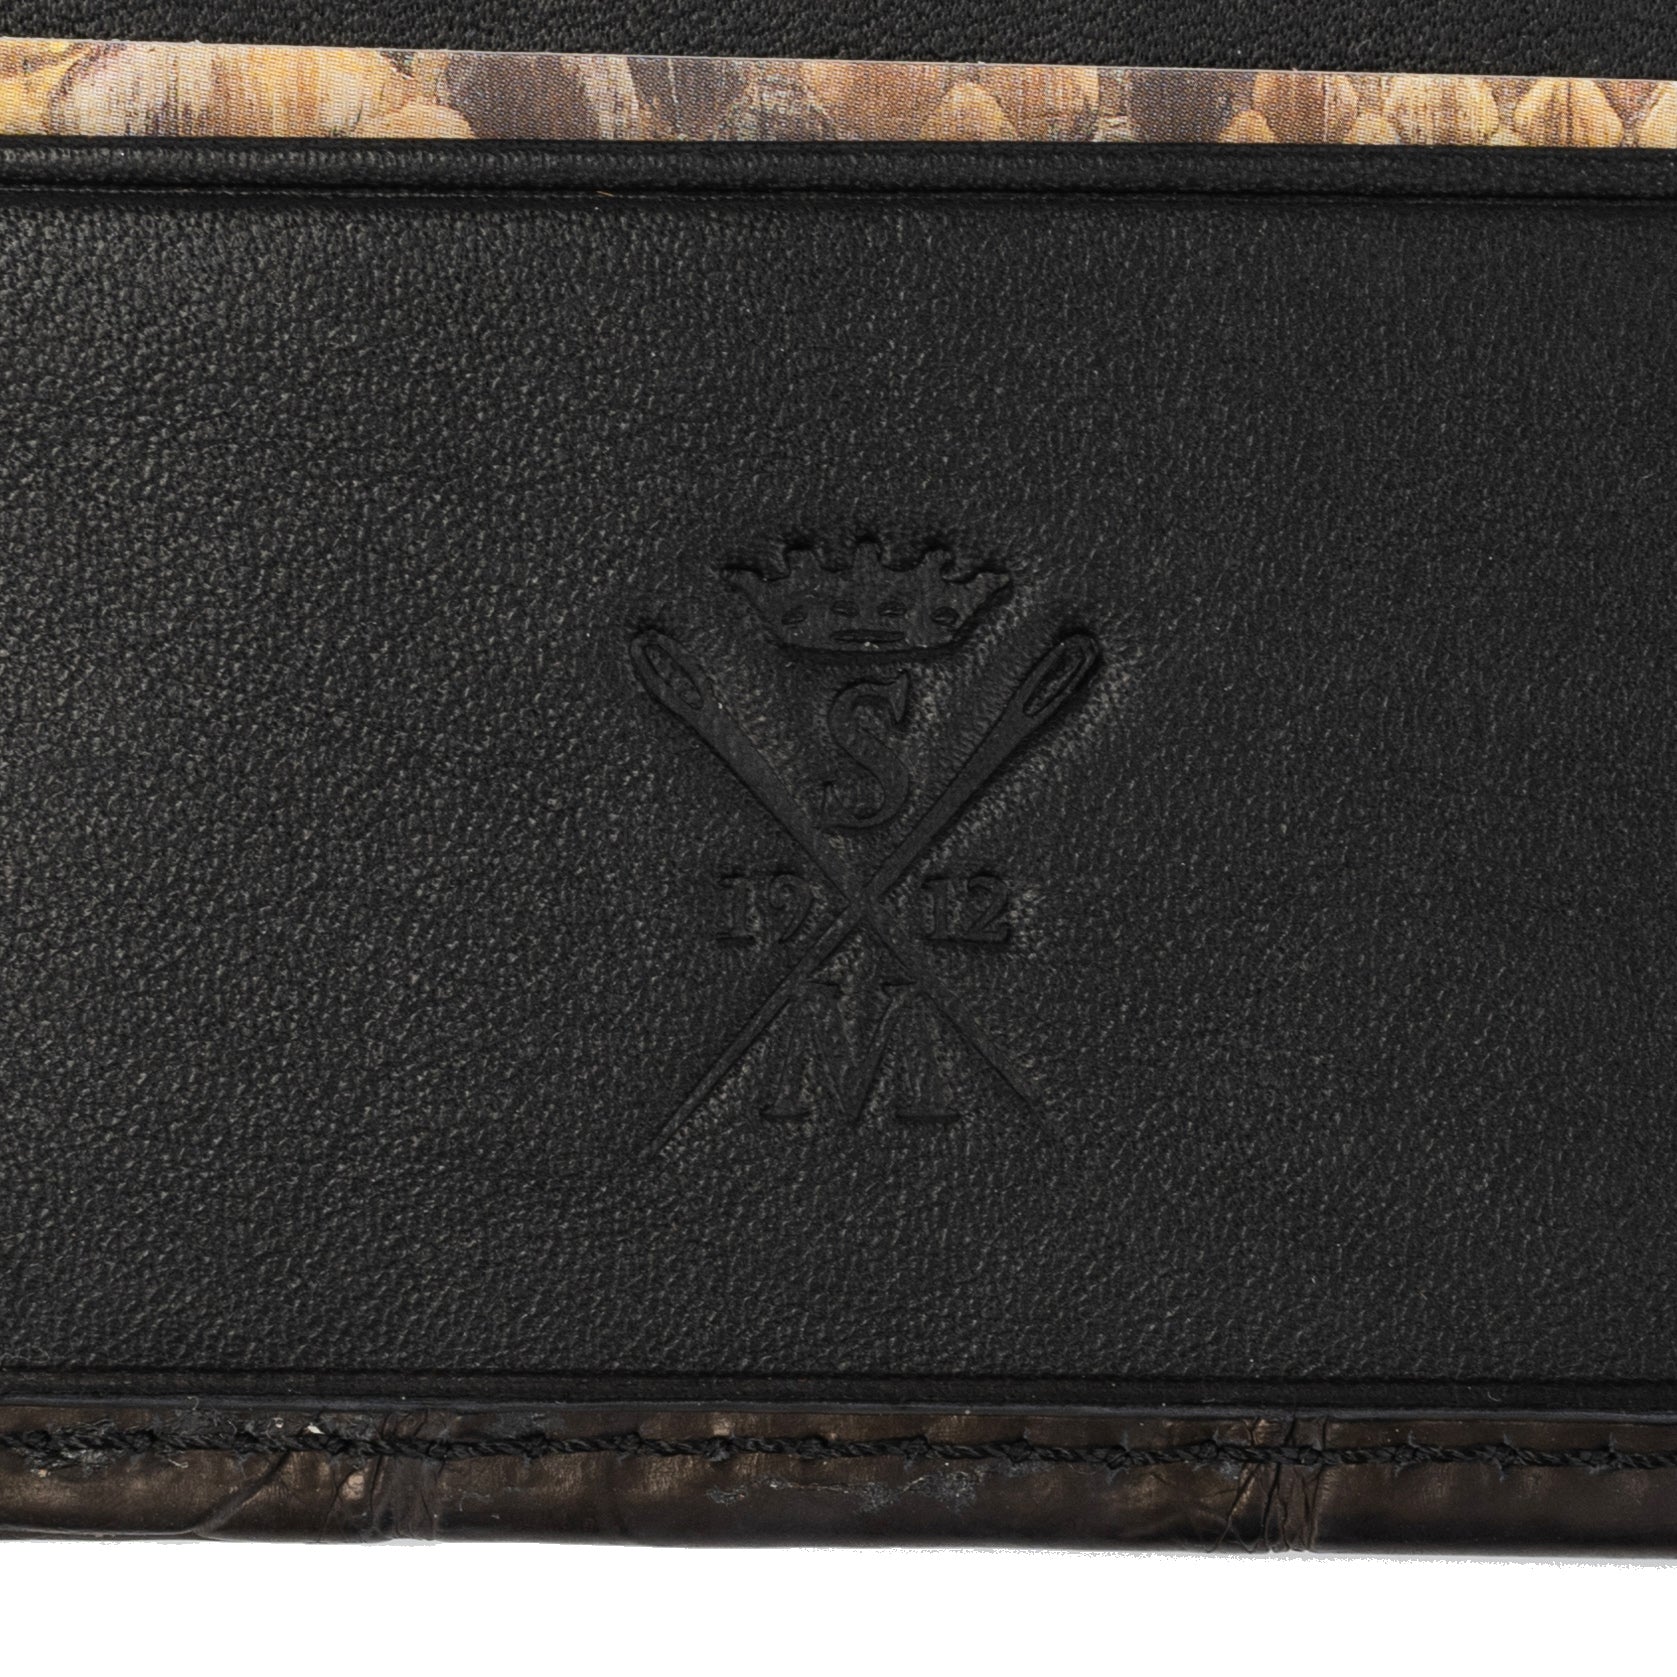 SUTOR MANTELLASSI Hand-Sewn Black-Brown Crocodile Leather Card Holder Wallet NEW SUTOR MANTELLASSI